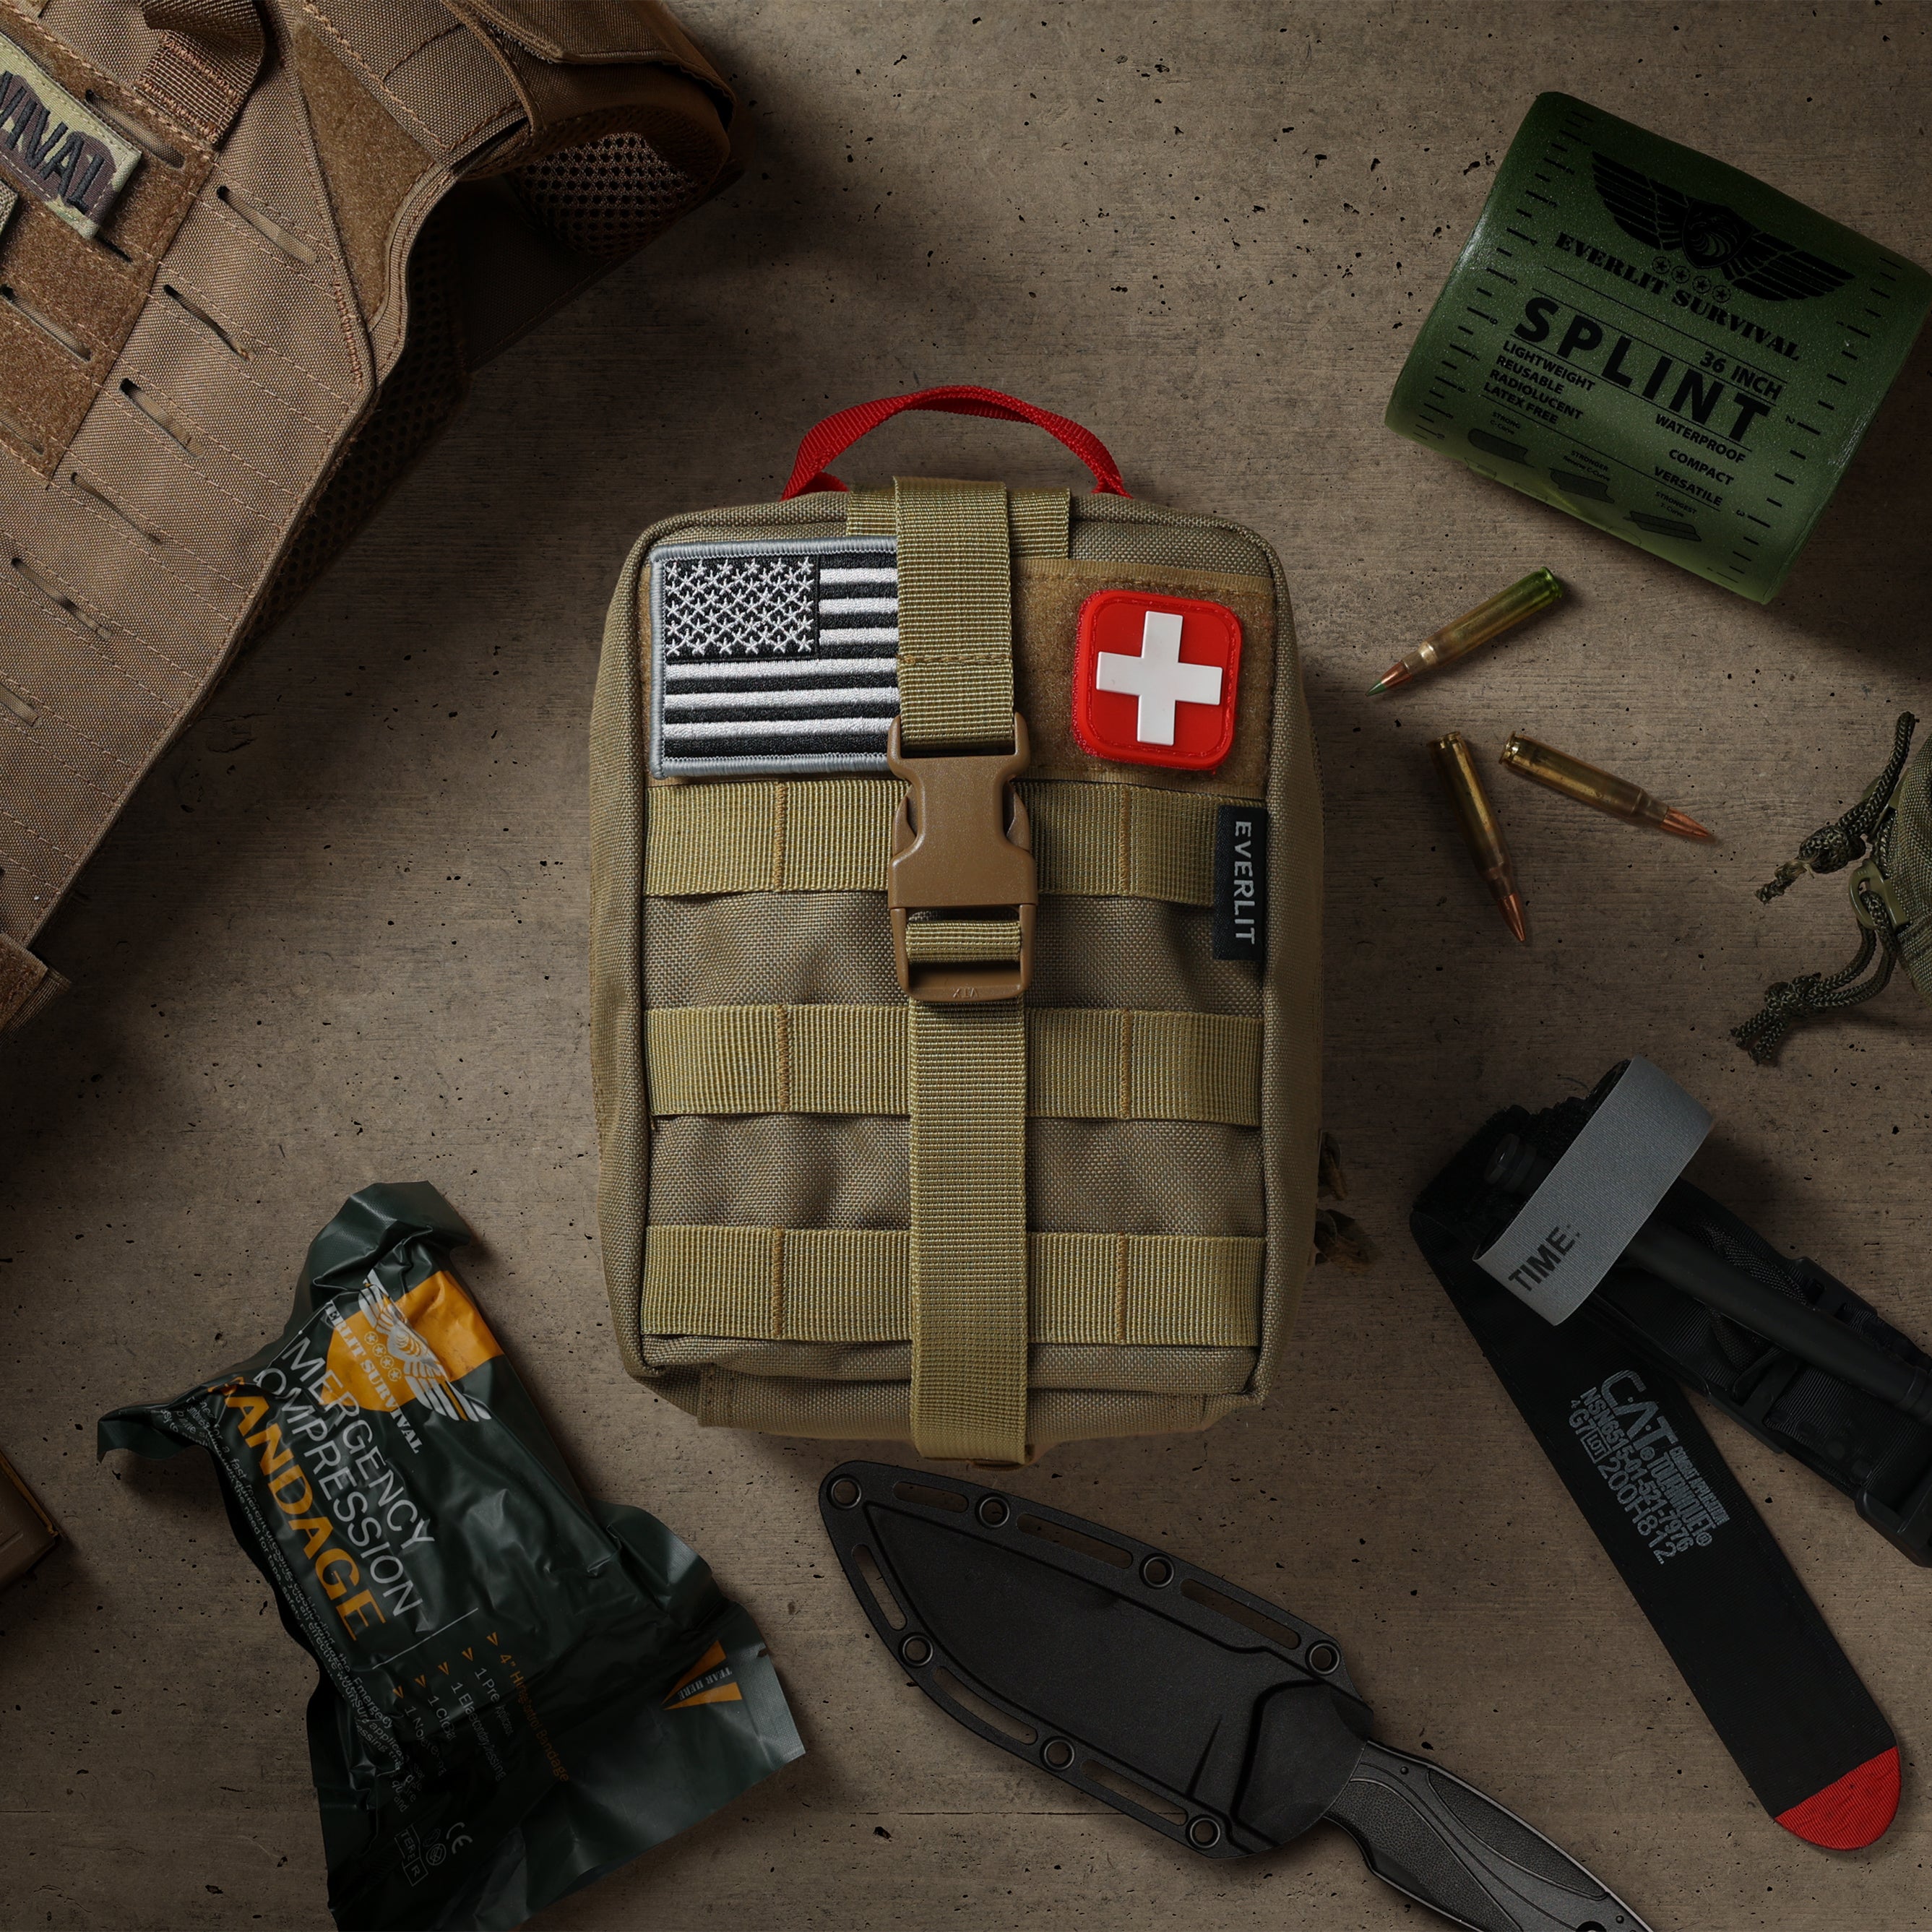 Starter Trauma First Aid Kit: Be Prepared for Emergencies